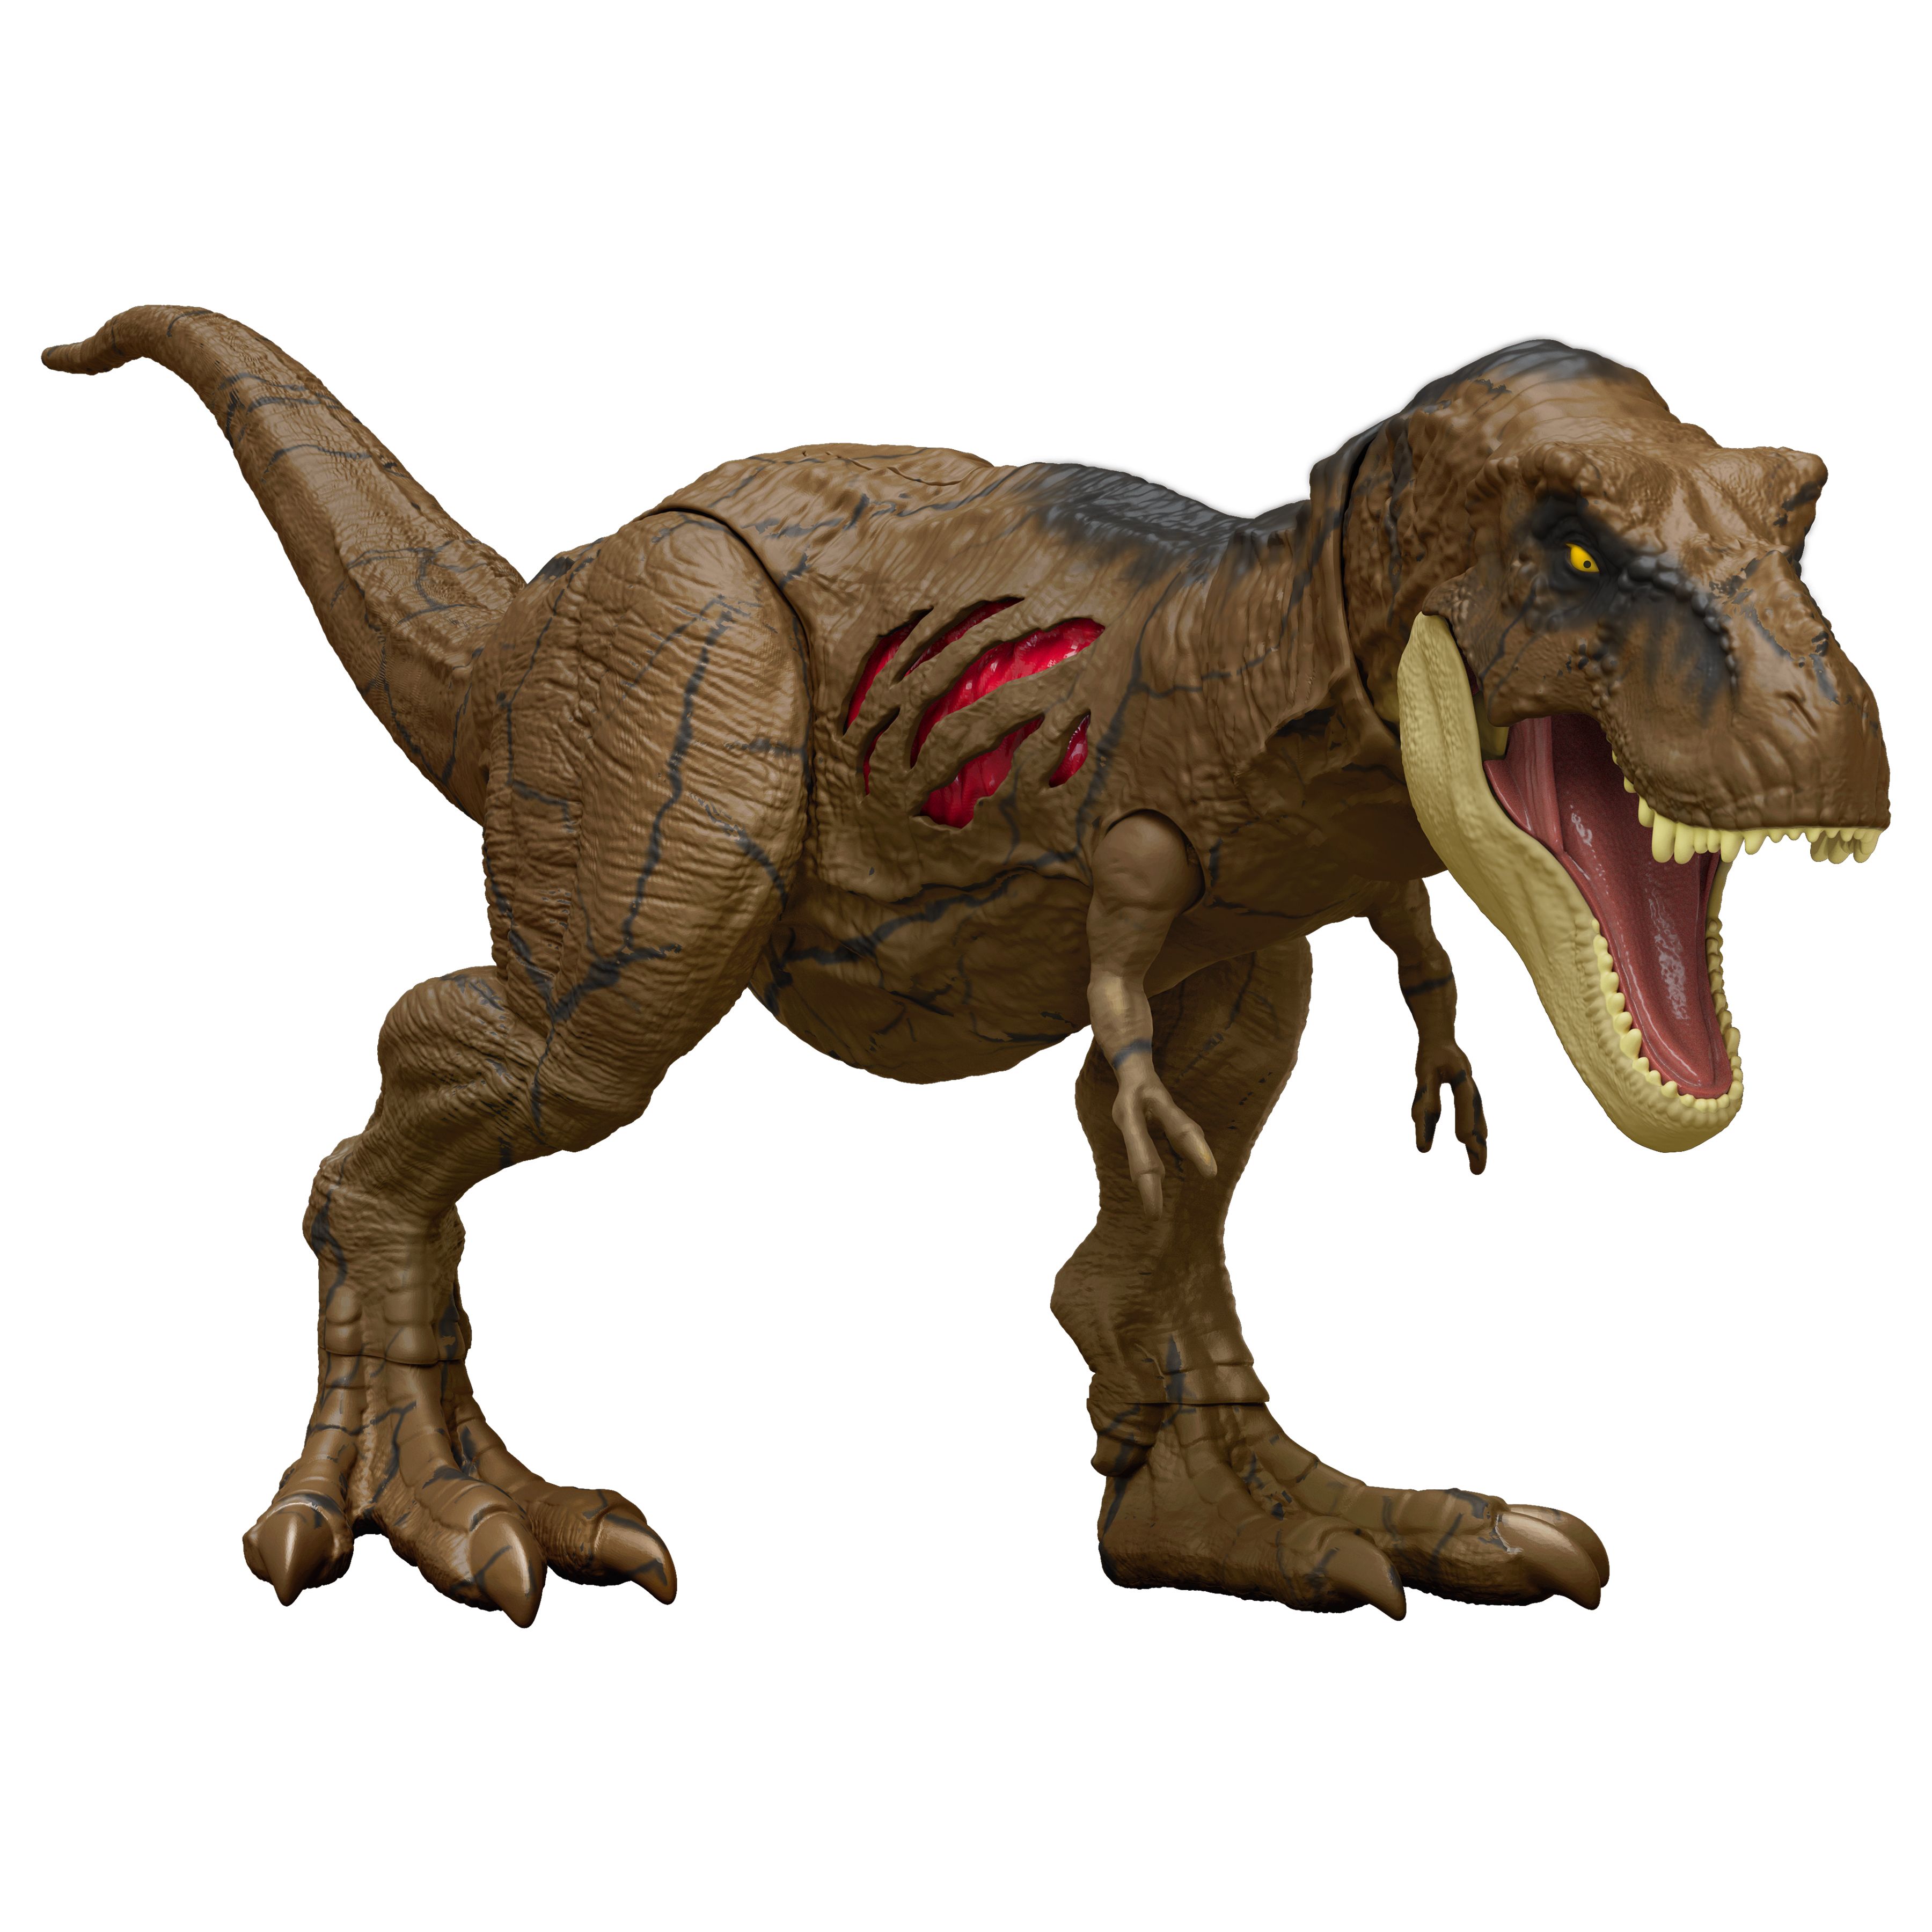 New Jurassic World Dominion Toys Include a Damaged Tyrannosaurus Rex & More